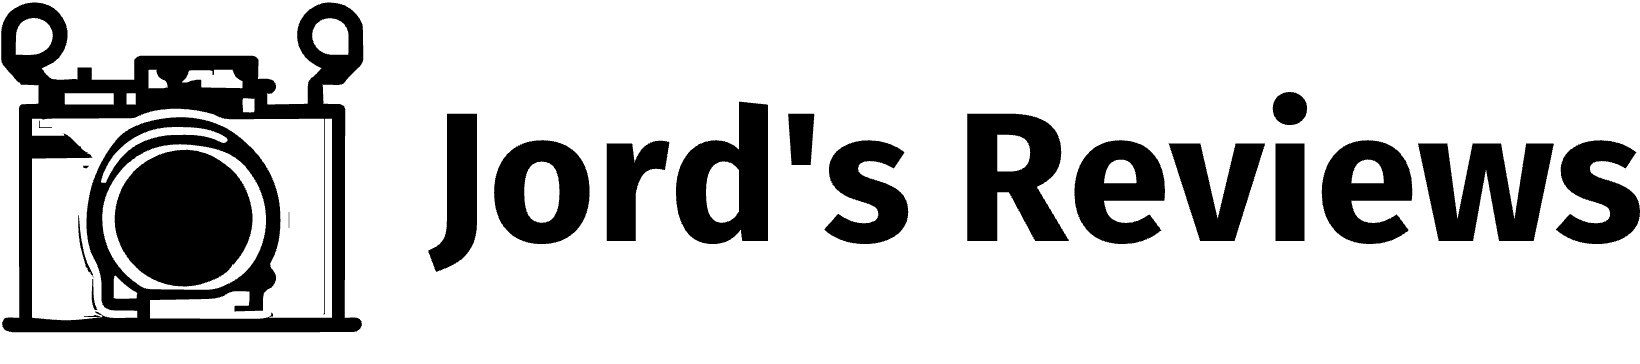 jord reviews logo